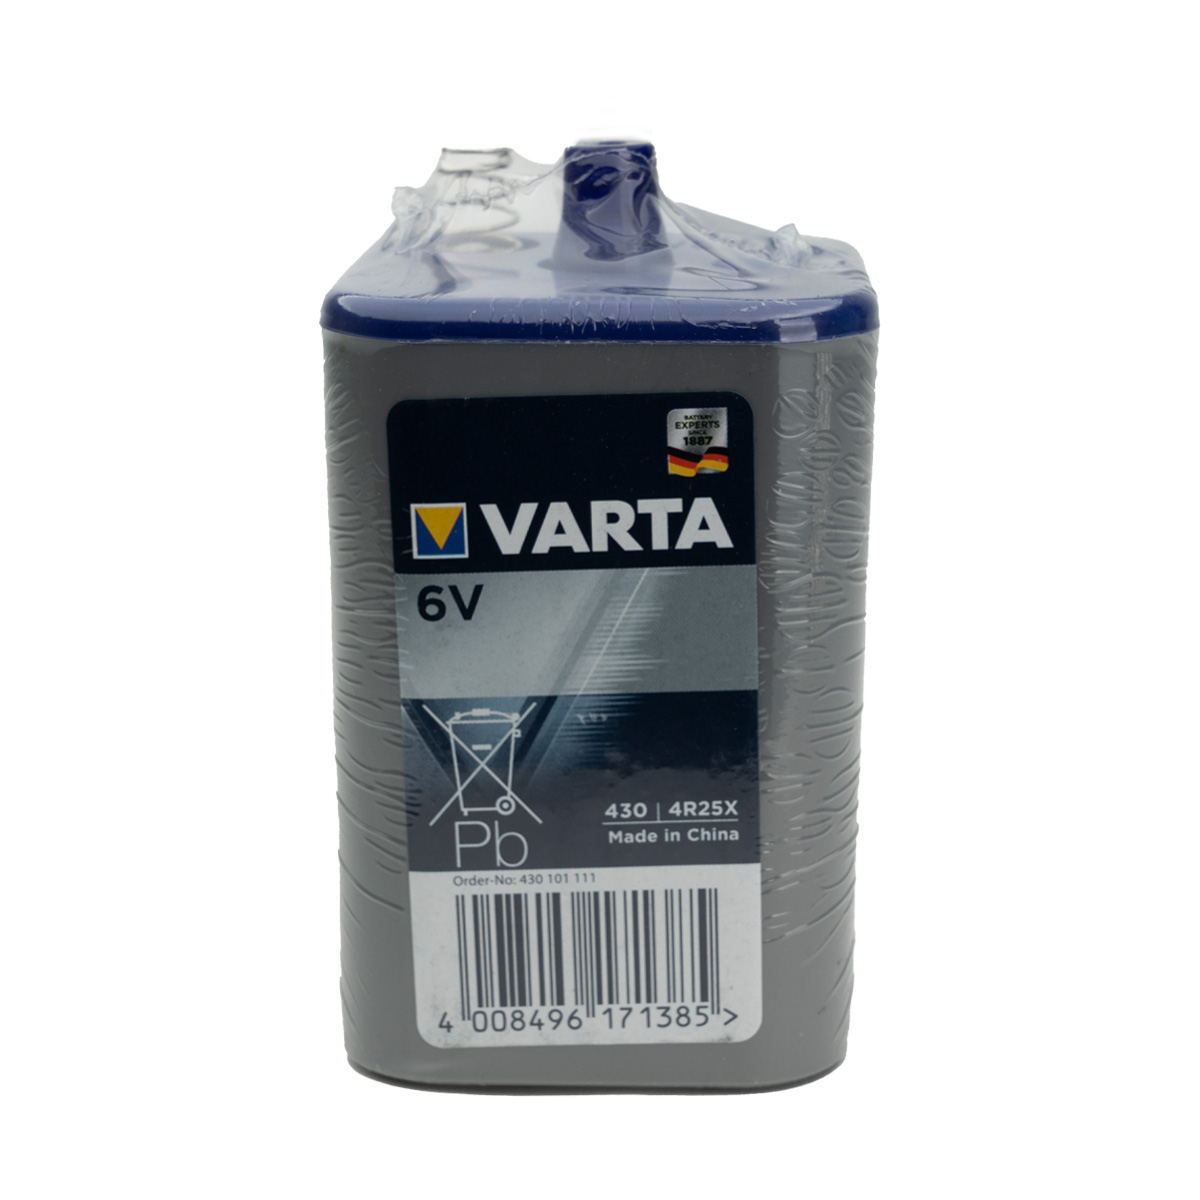 Varta Longlife Zinc carbon 430 / 4R25X - 6V 7.5Ah - Additional sizes -  Alkaline - Disposable batteries